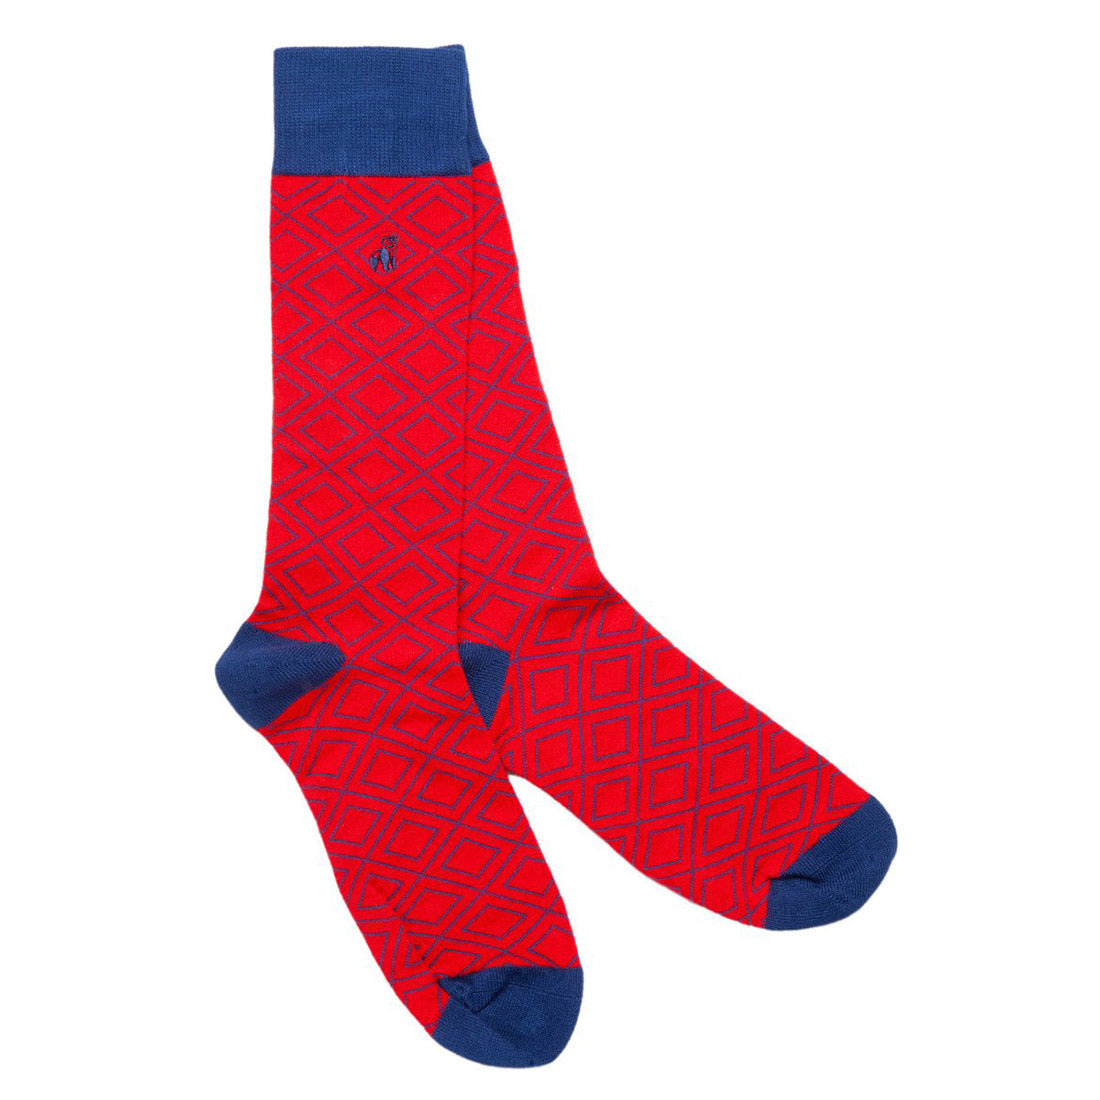 socks-red-diamond-bamboo-socks-1.jpg